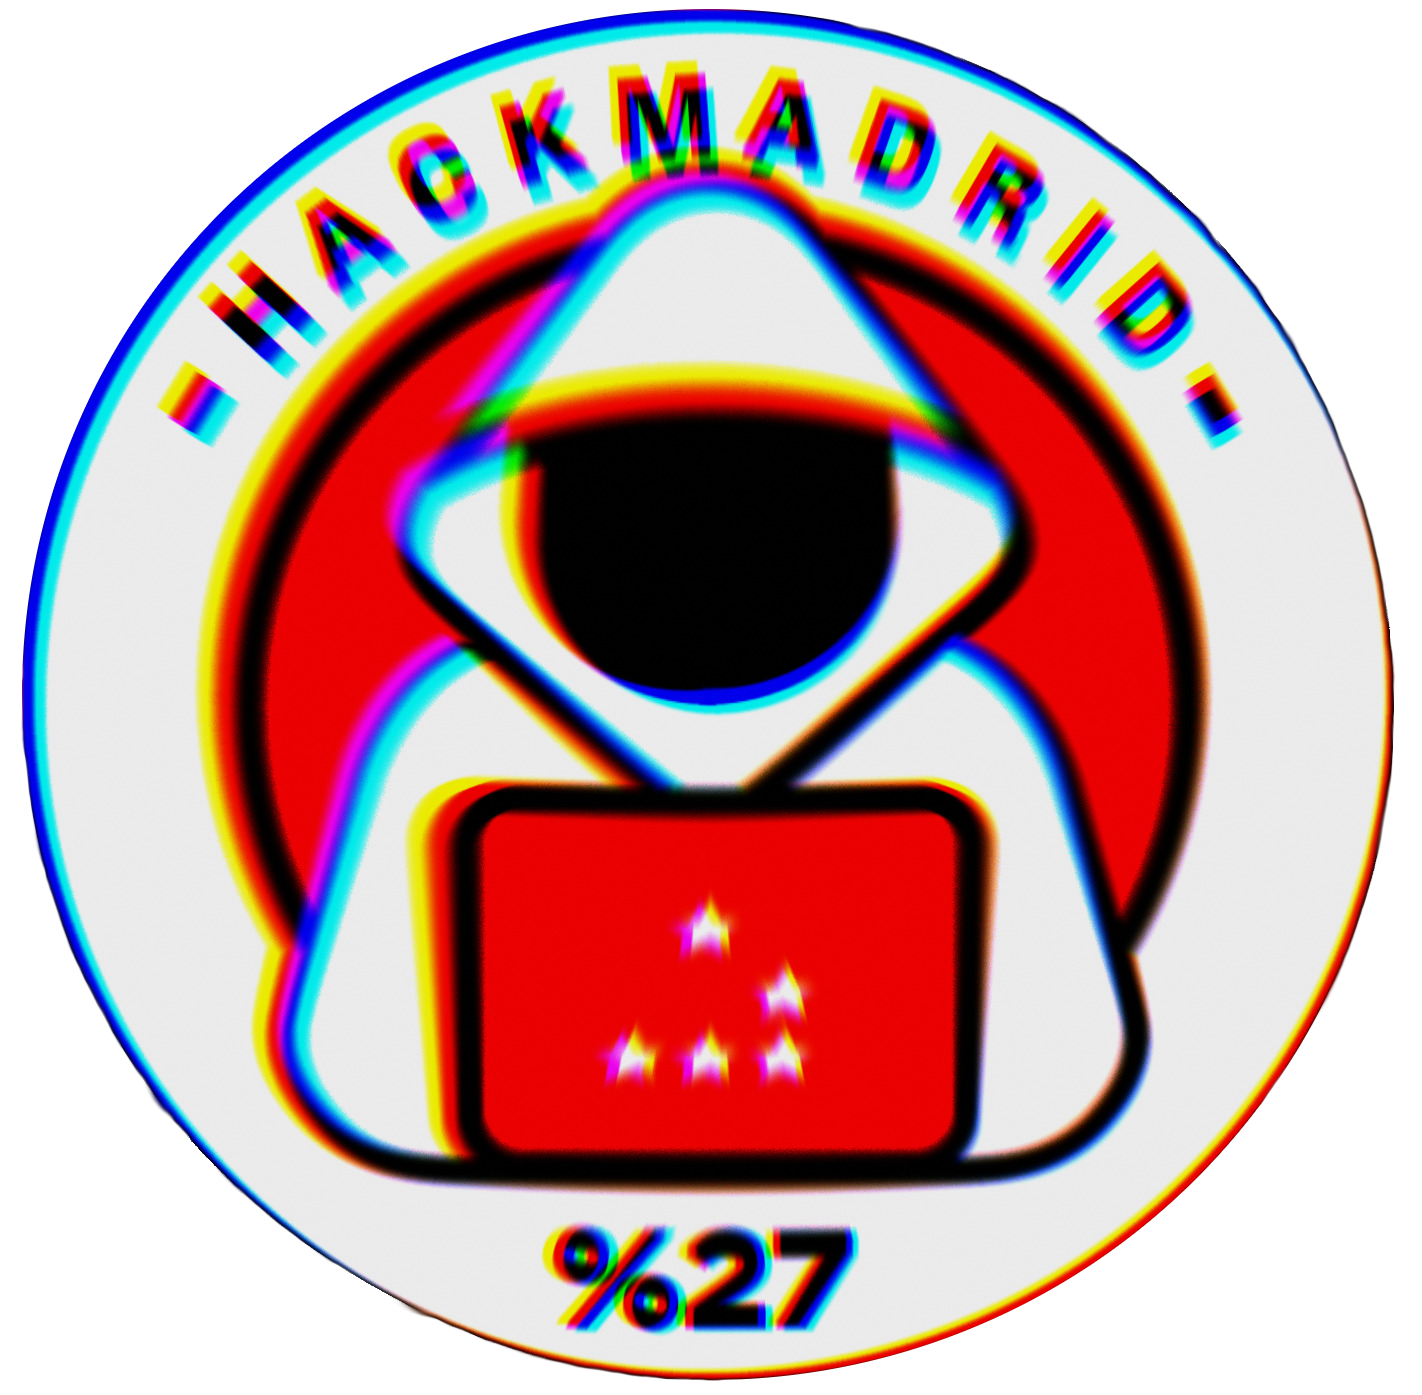 logo glitch hackmadrid 2020.png